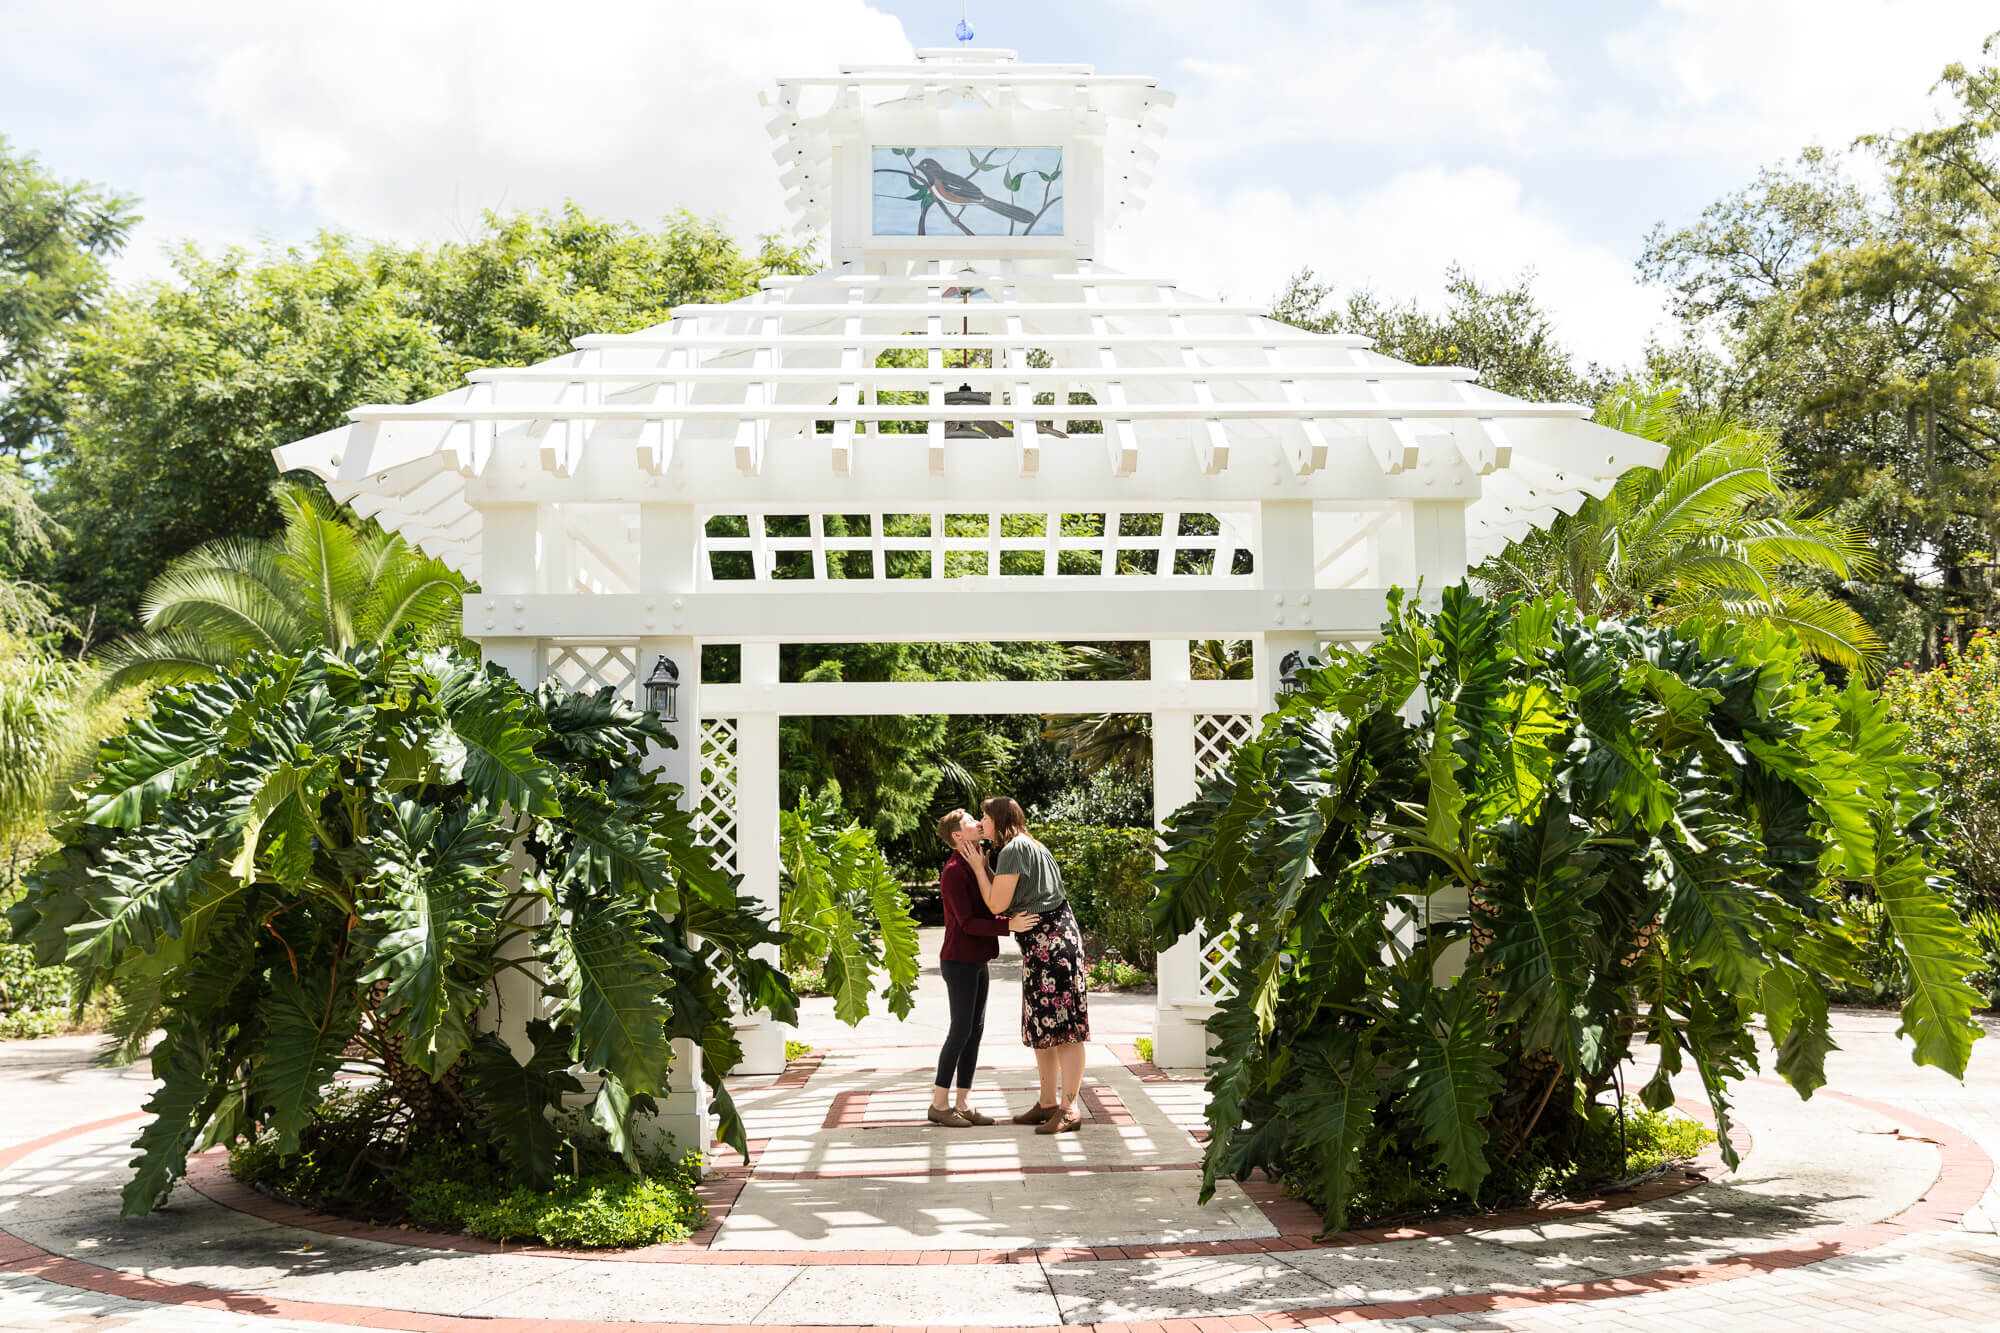  surprise marriage proposal at Leu Gardens, Orlando, Florida 